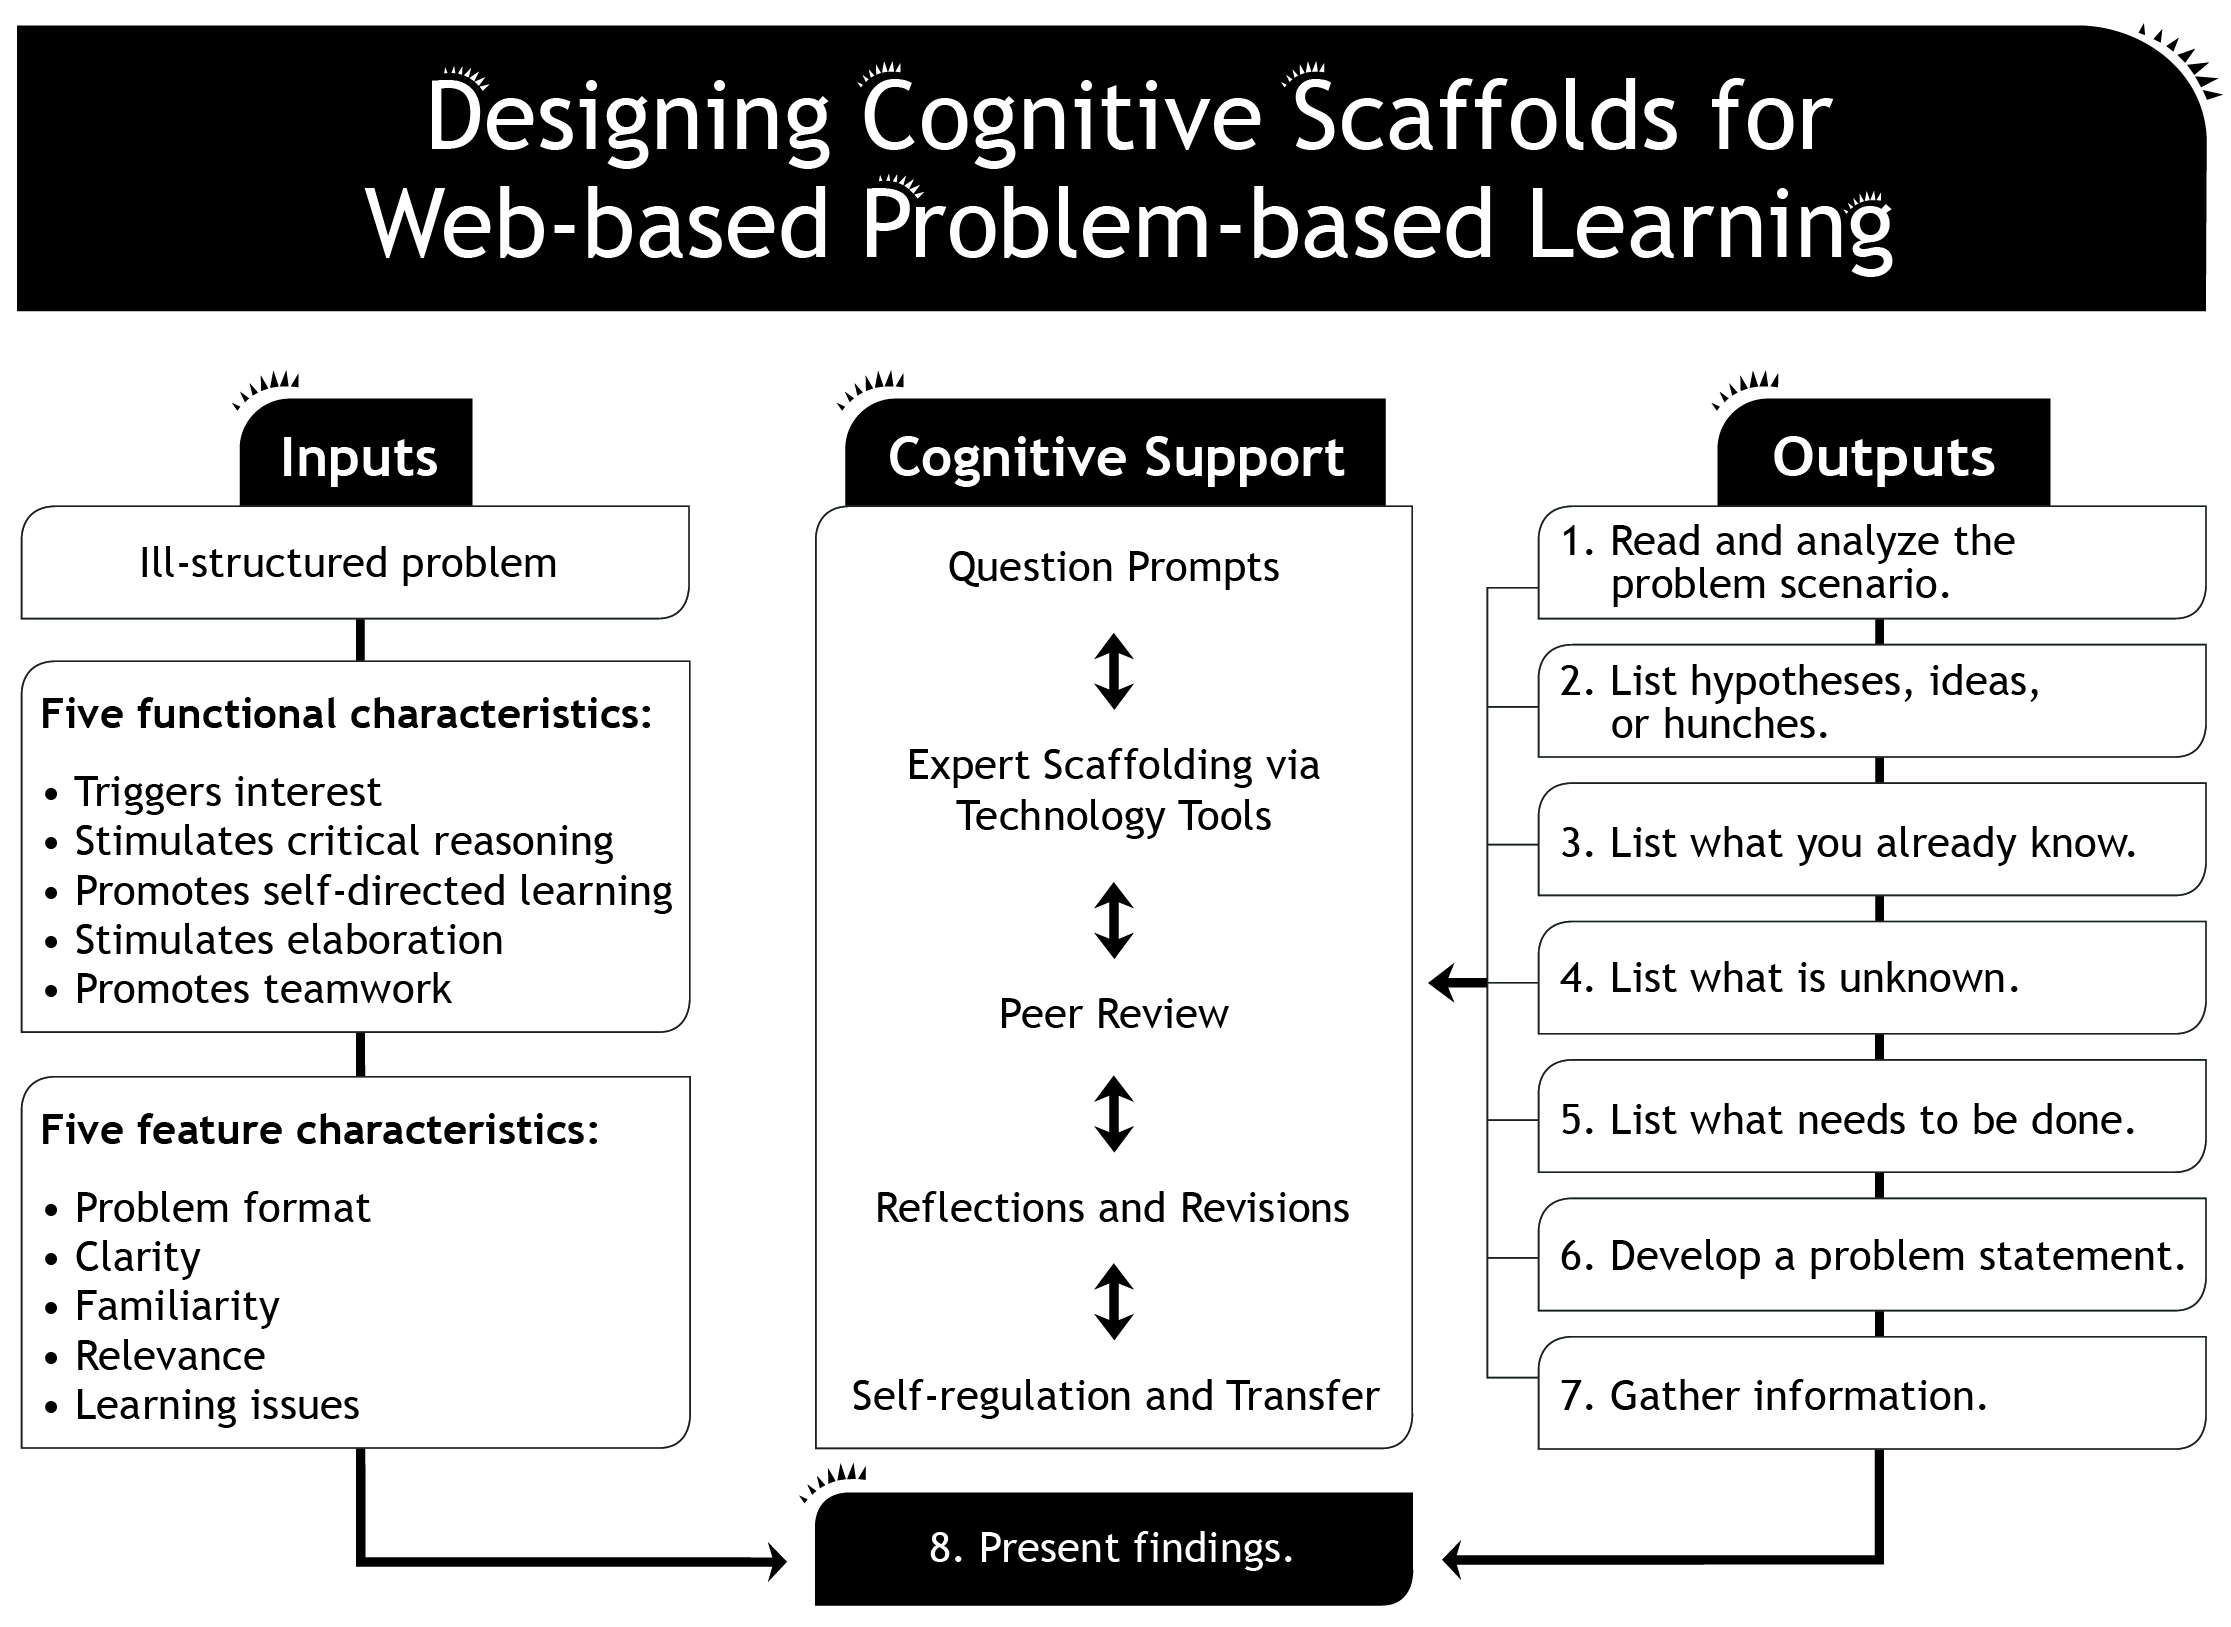 Designing cognitive scaffolds for Web-based Problem-based Learning